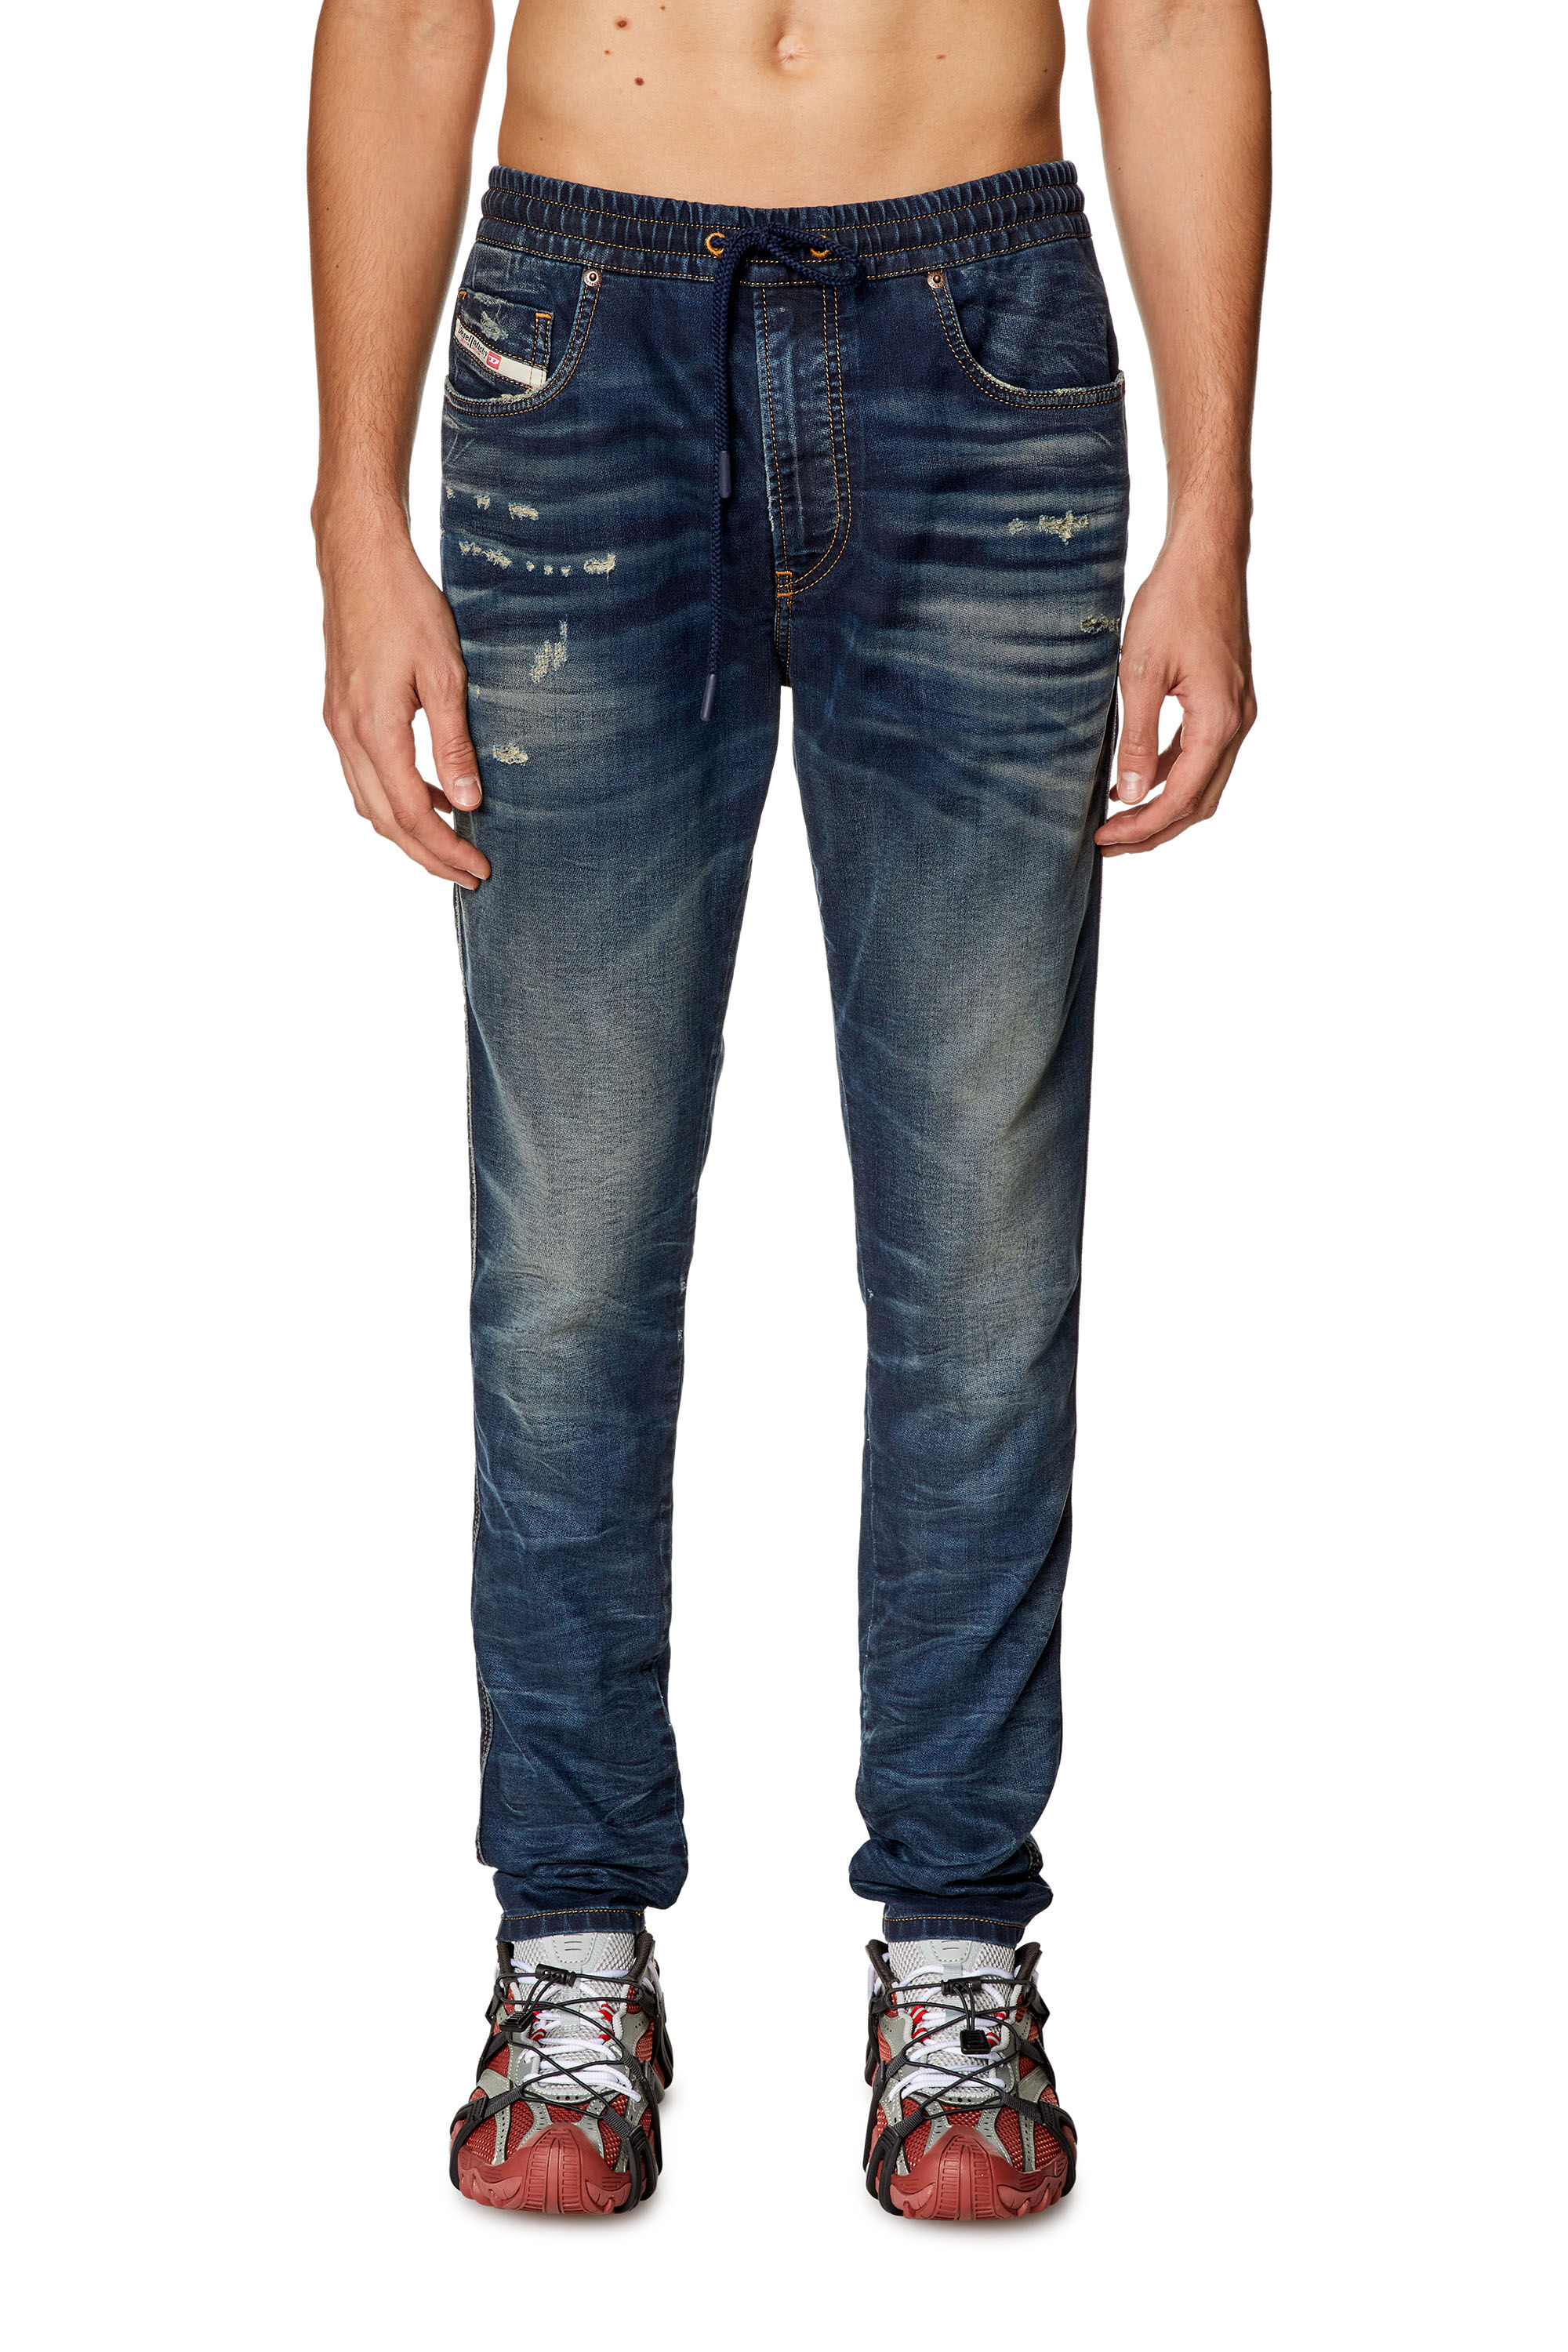 Men's Slim Jeans | Dark Blue | Diesel 2060 D-Strukt Joggjeans®